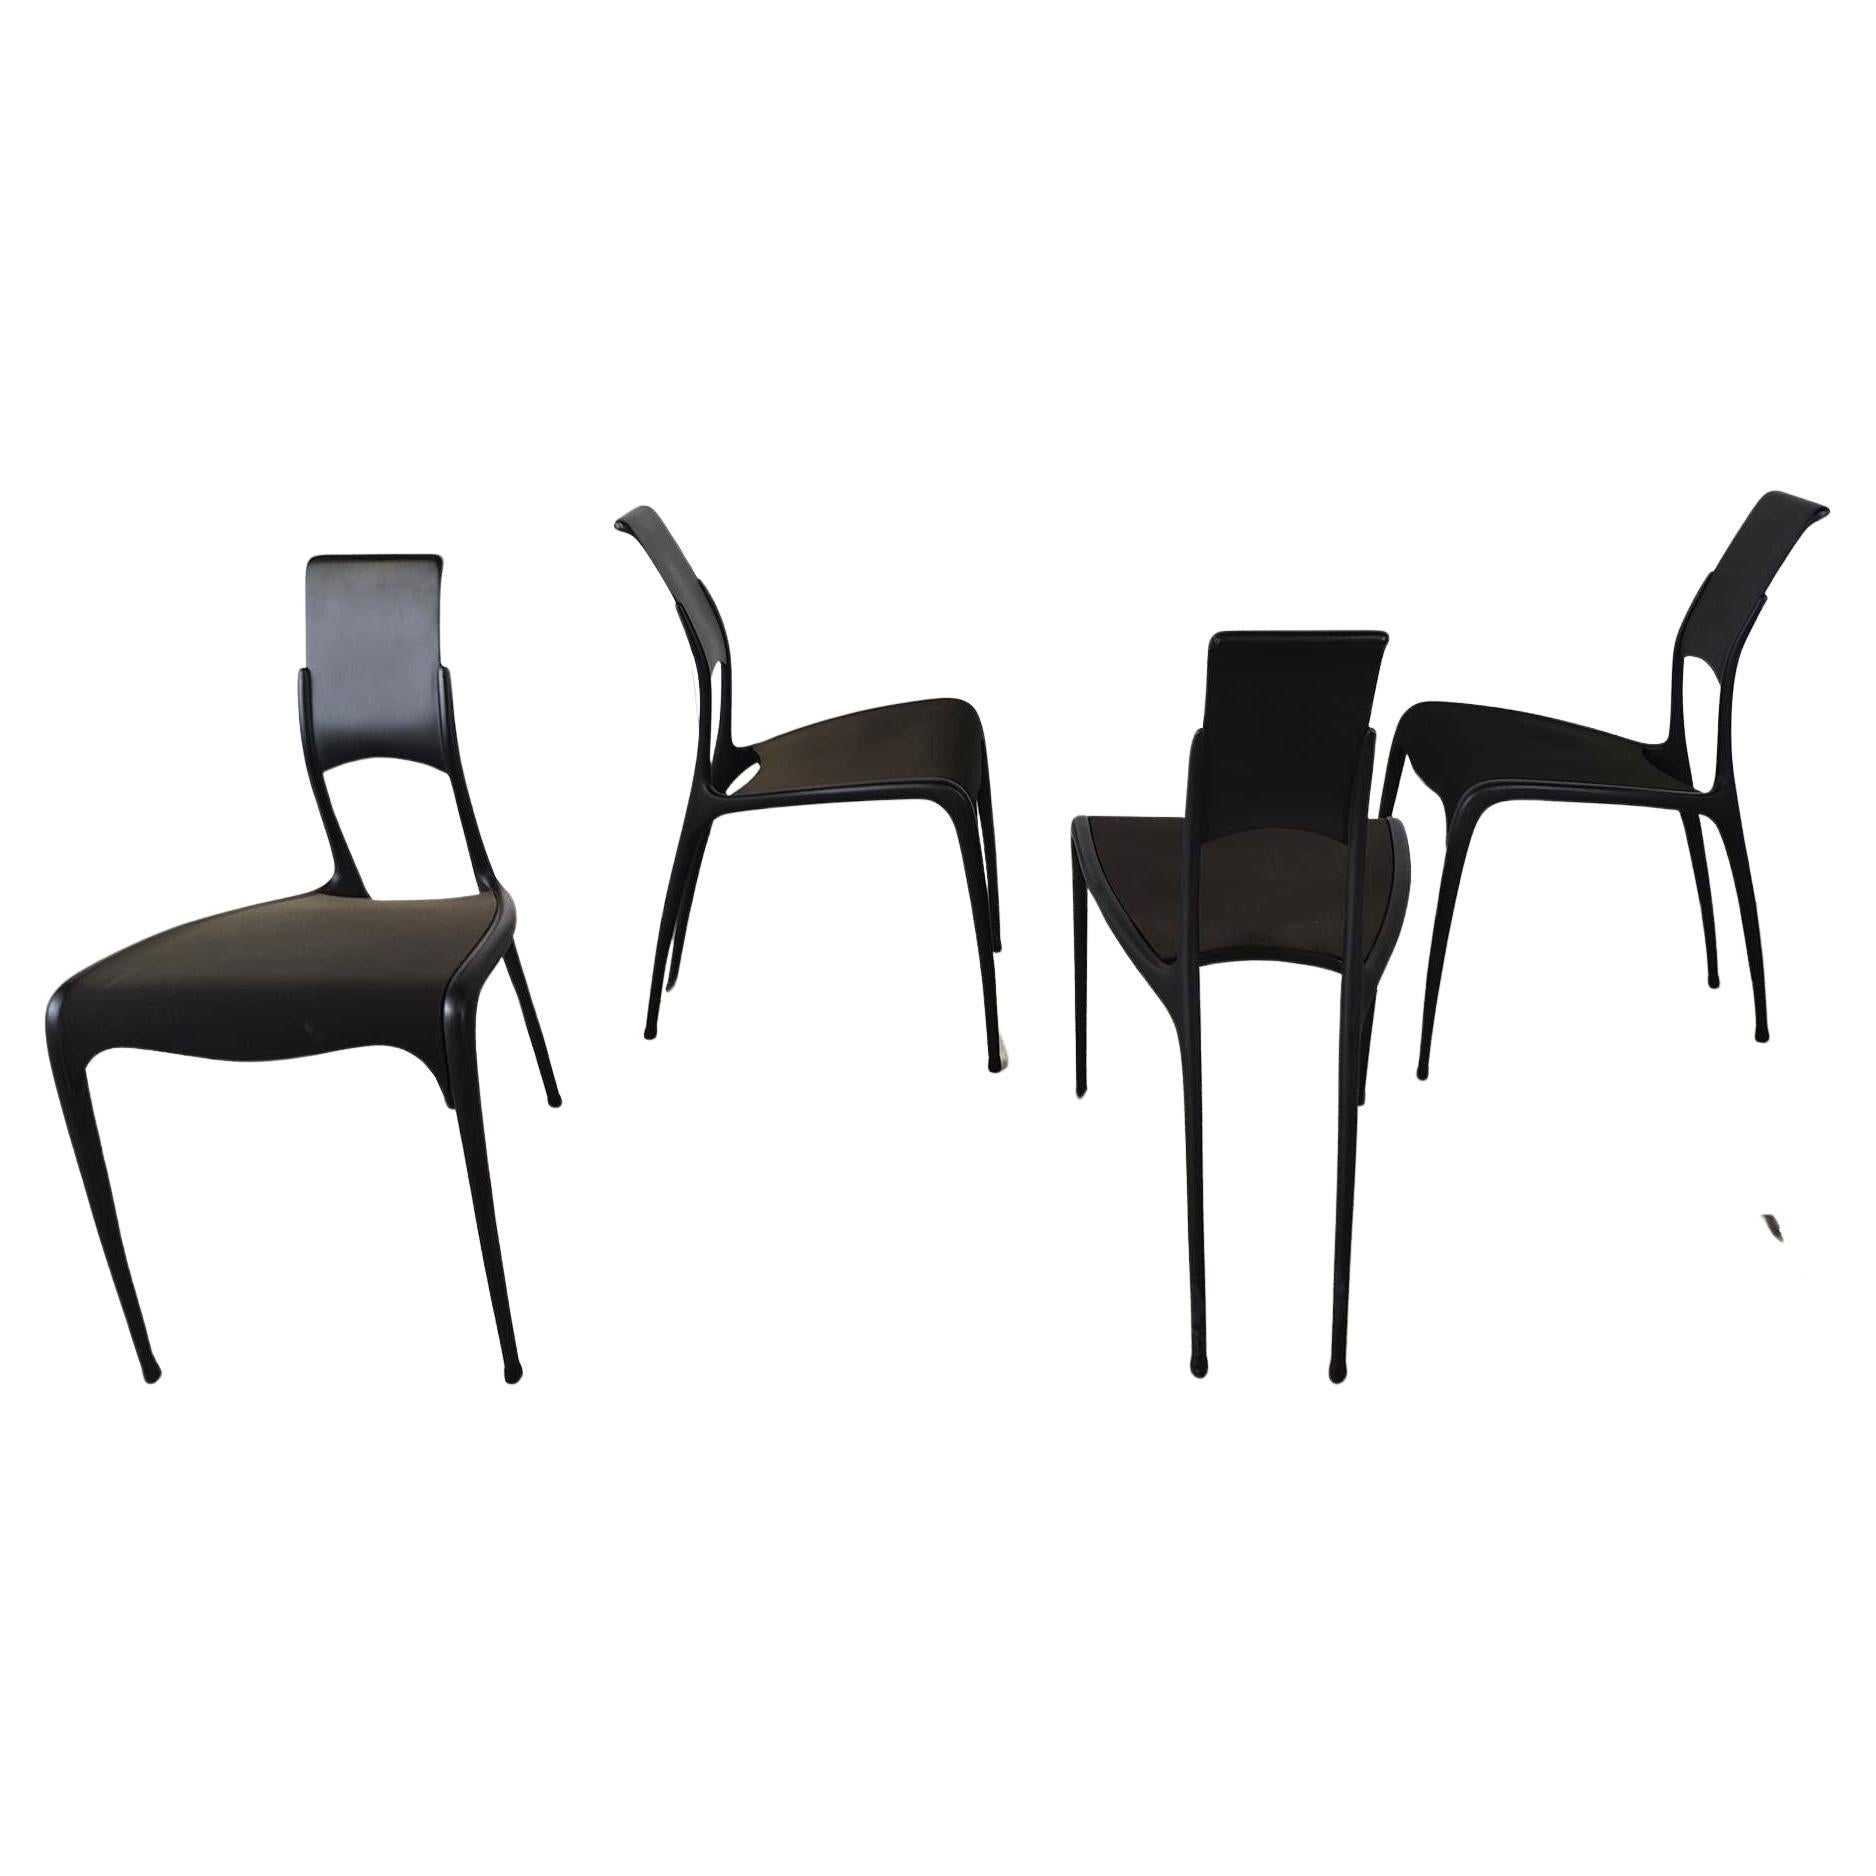 Rare carbon fibre C06 chairs by Pol Quadens, 1990s For Sale